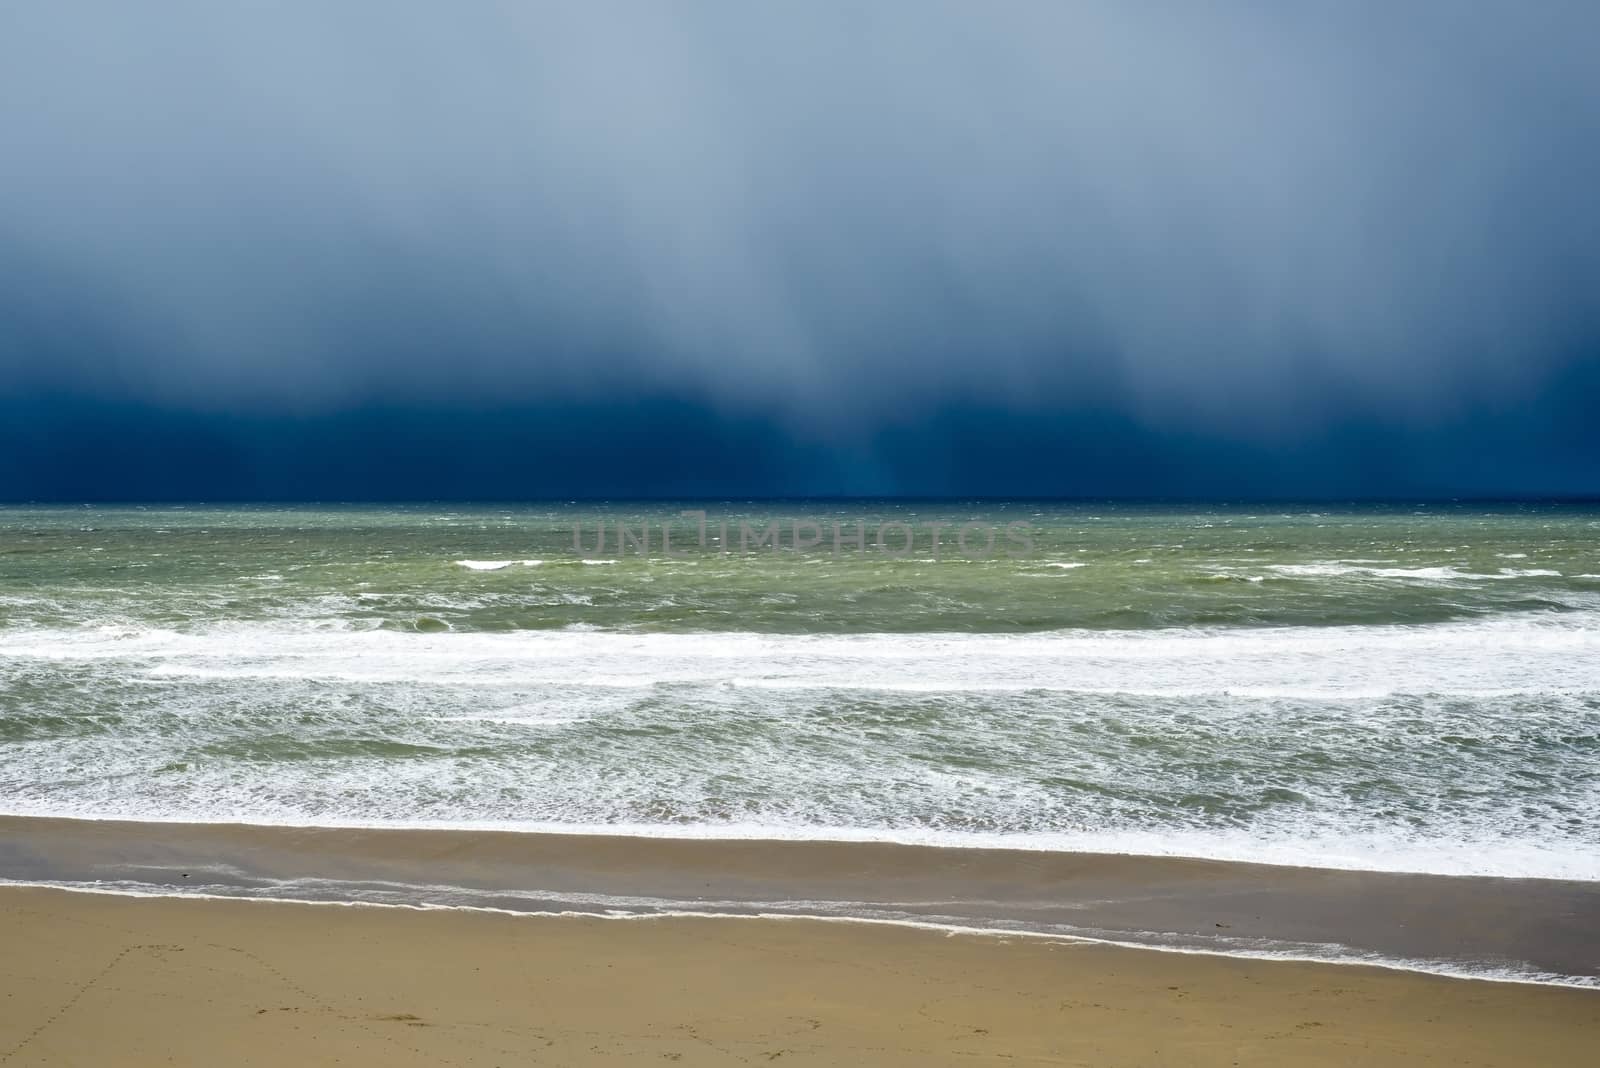 winter rain storm approaching ballybunion beach